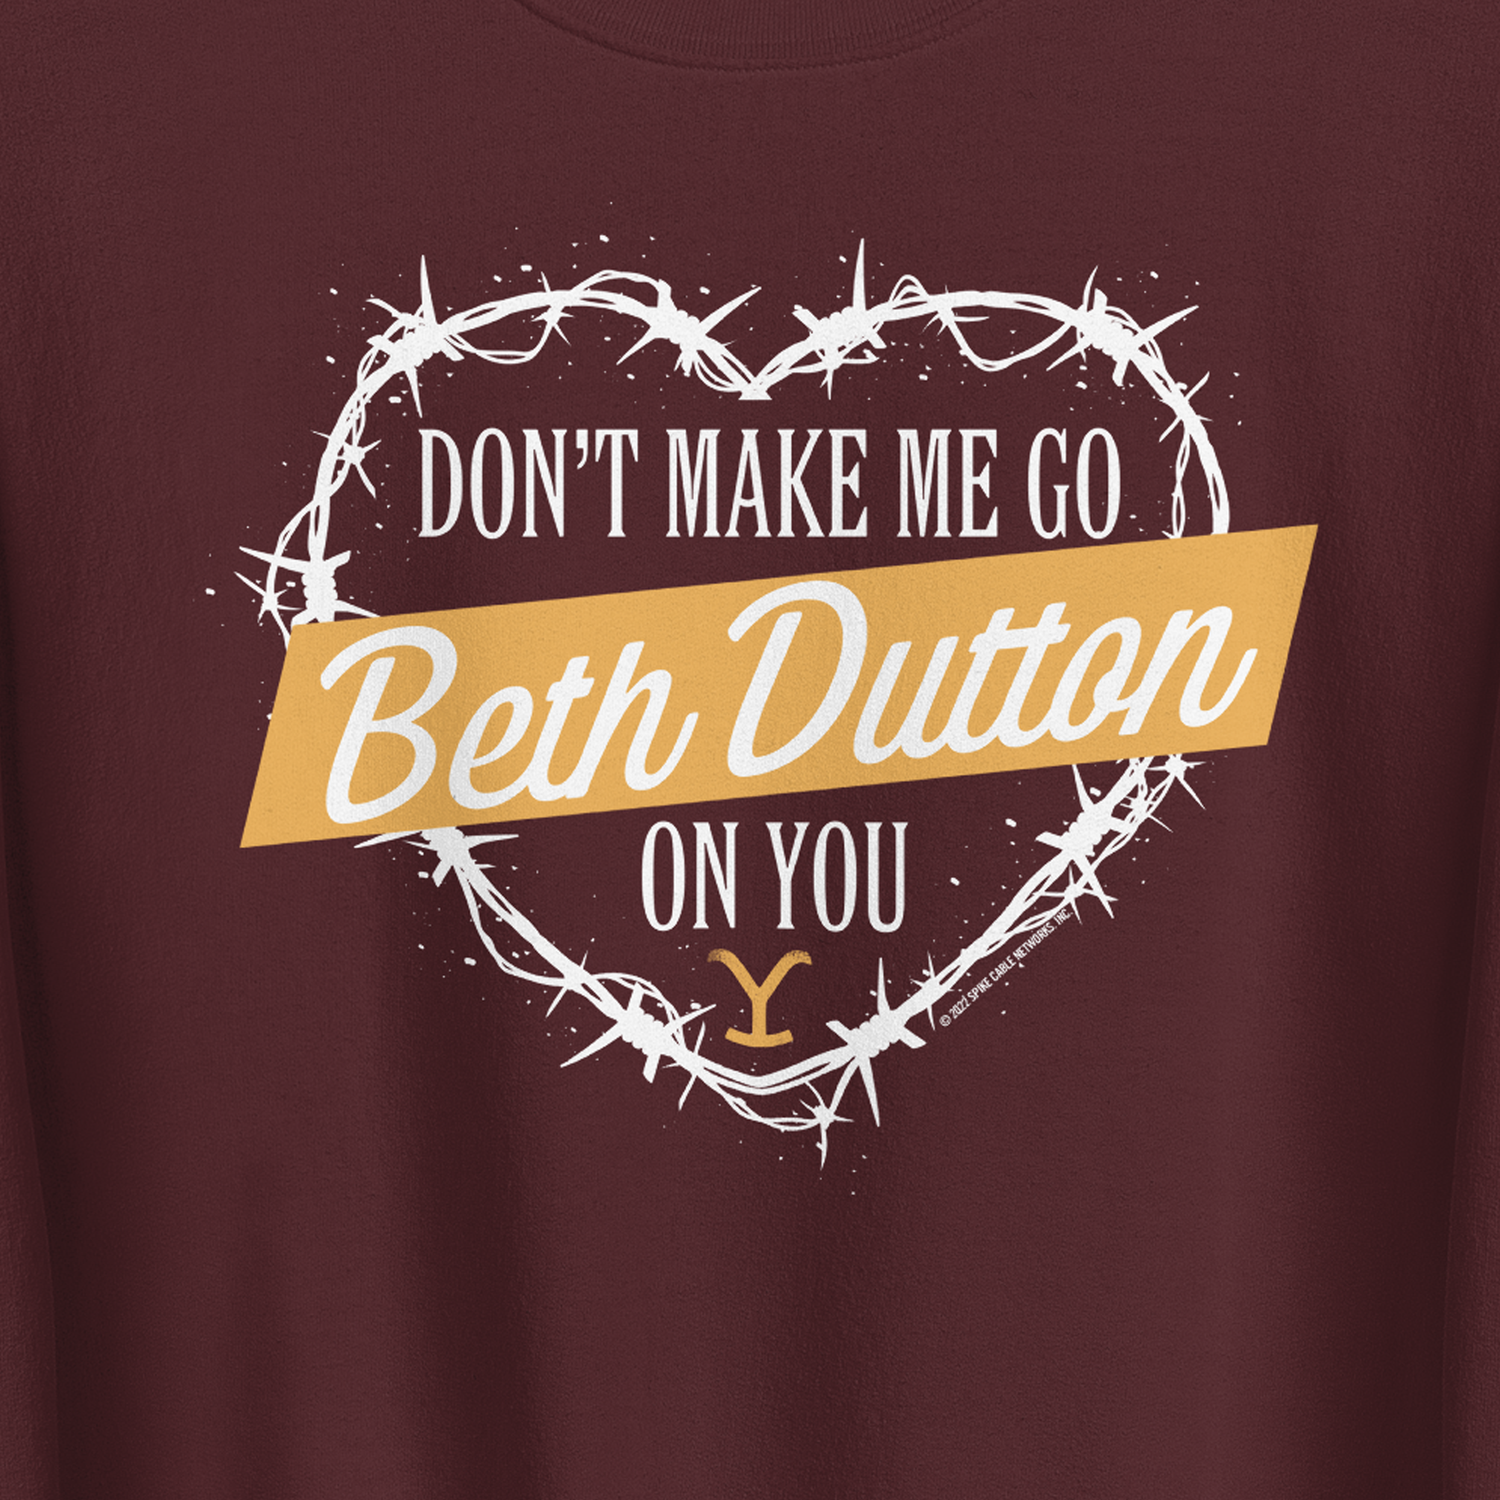 Yellowstone Don't Make Me Go Beth Dutton On You Heart Fleece Crewneck Sweatshirt